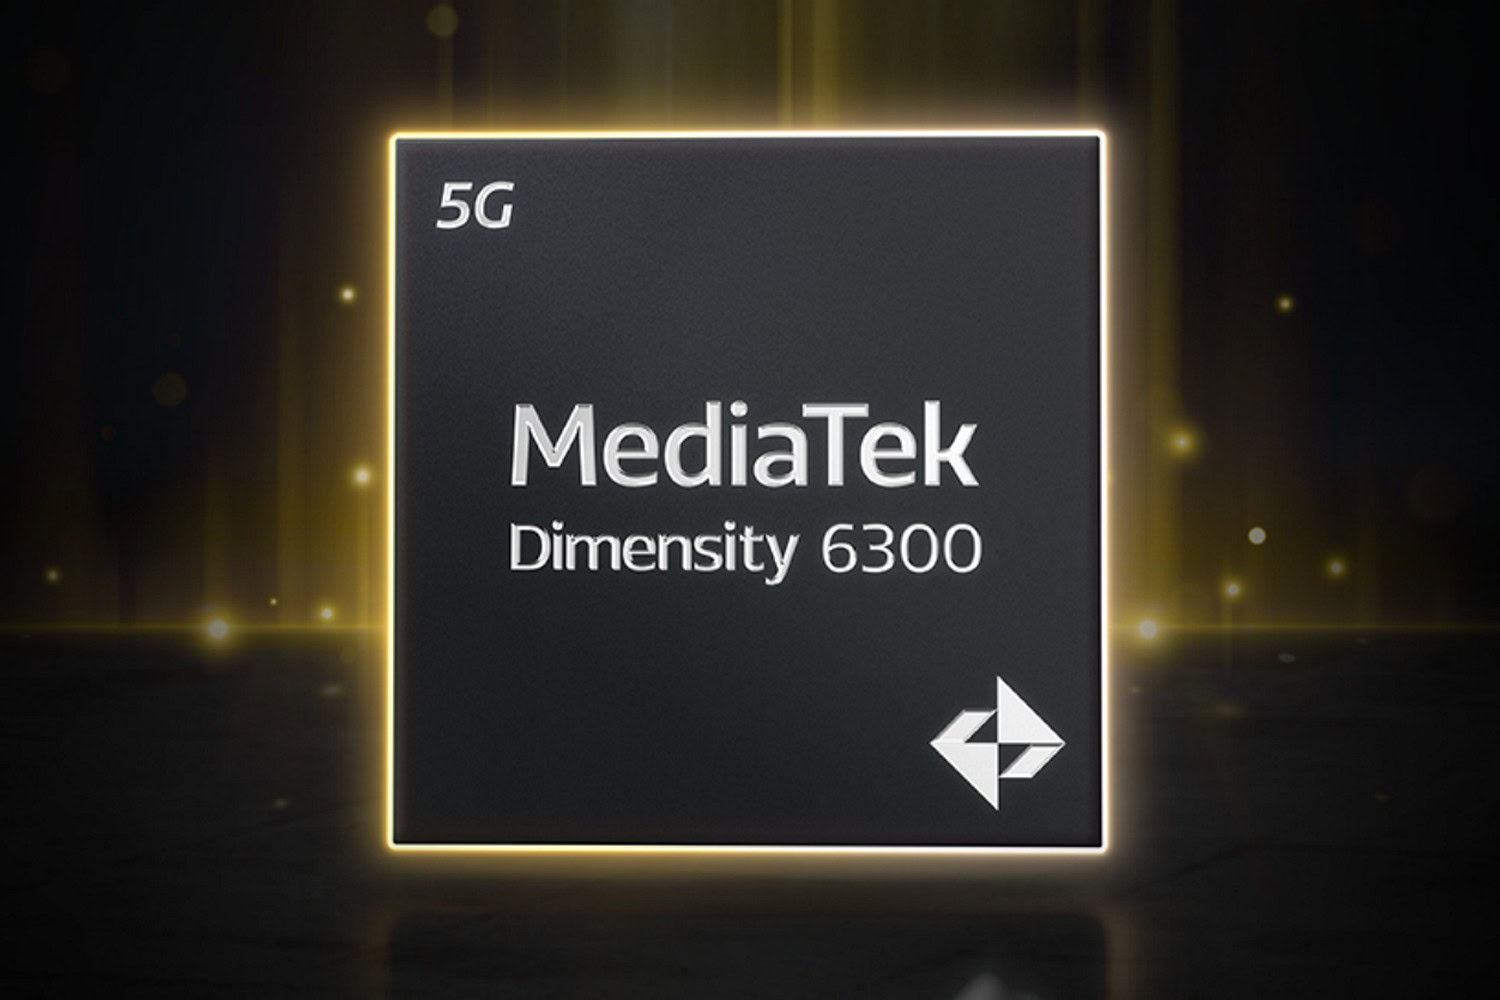 MediaTek Dimensity 6300 Unveiled - 10% Boost in Performance Over Predecessor 7